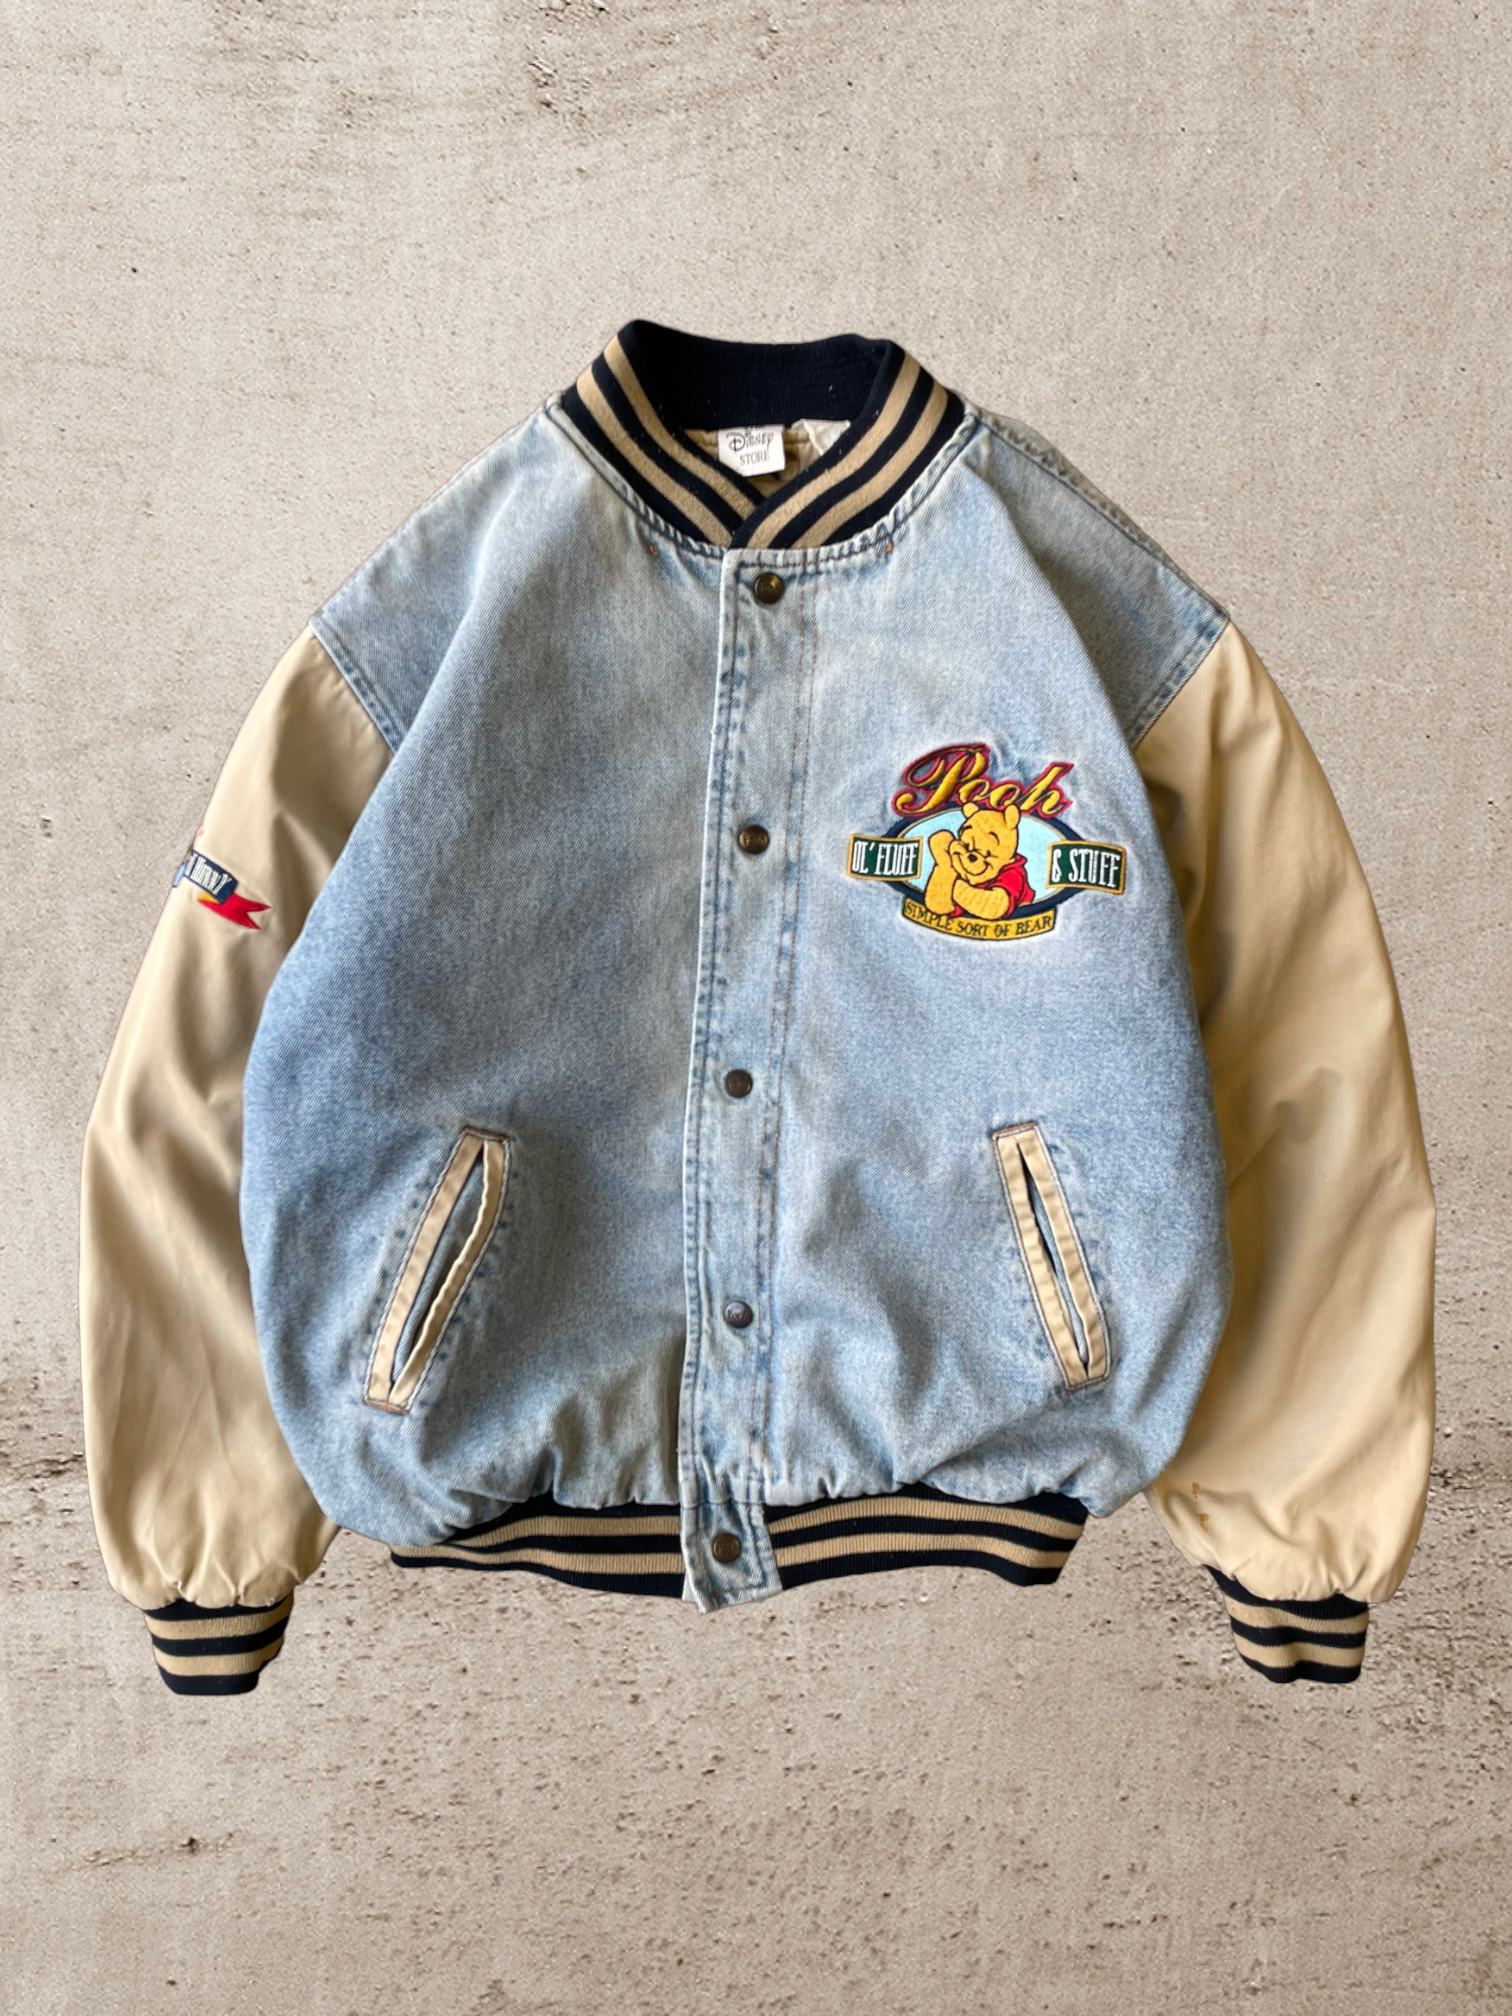 90s Disney Winnie the Pooh Varsity Jacket - Medium